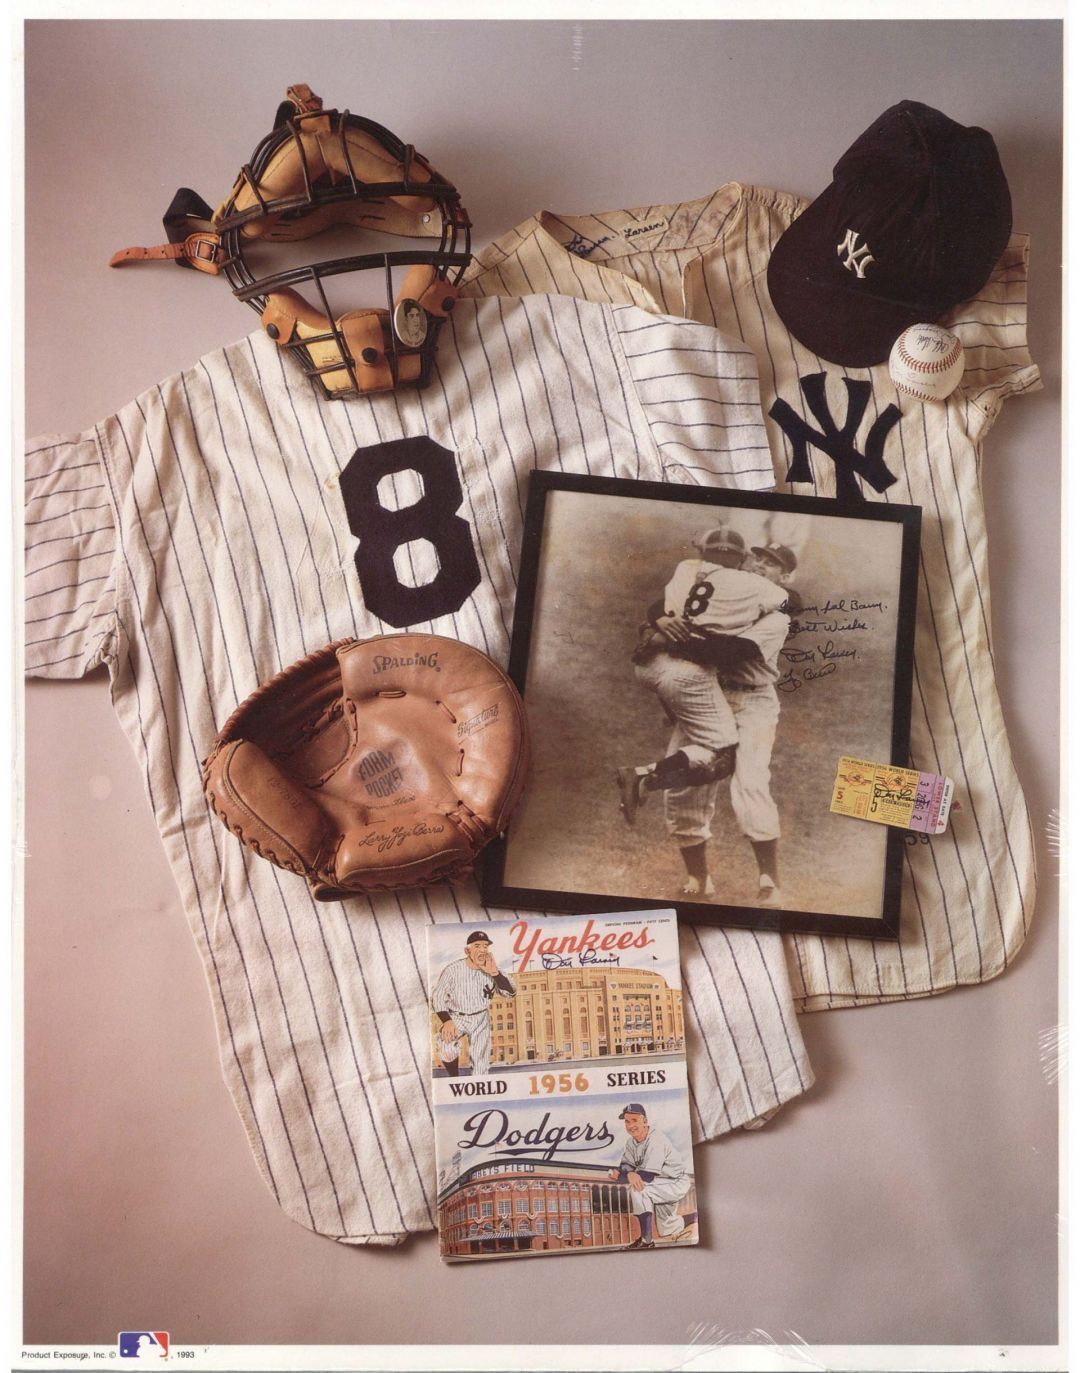 Yogi Berra and Don Larsen Poster - Sports Memorabilia - Sports Memorabilia